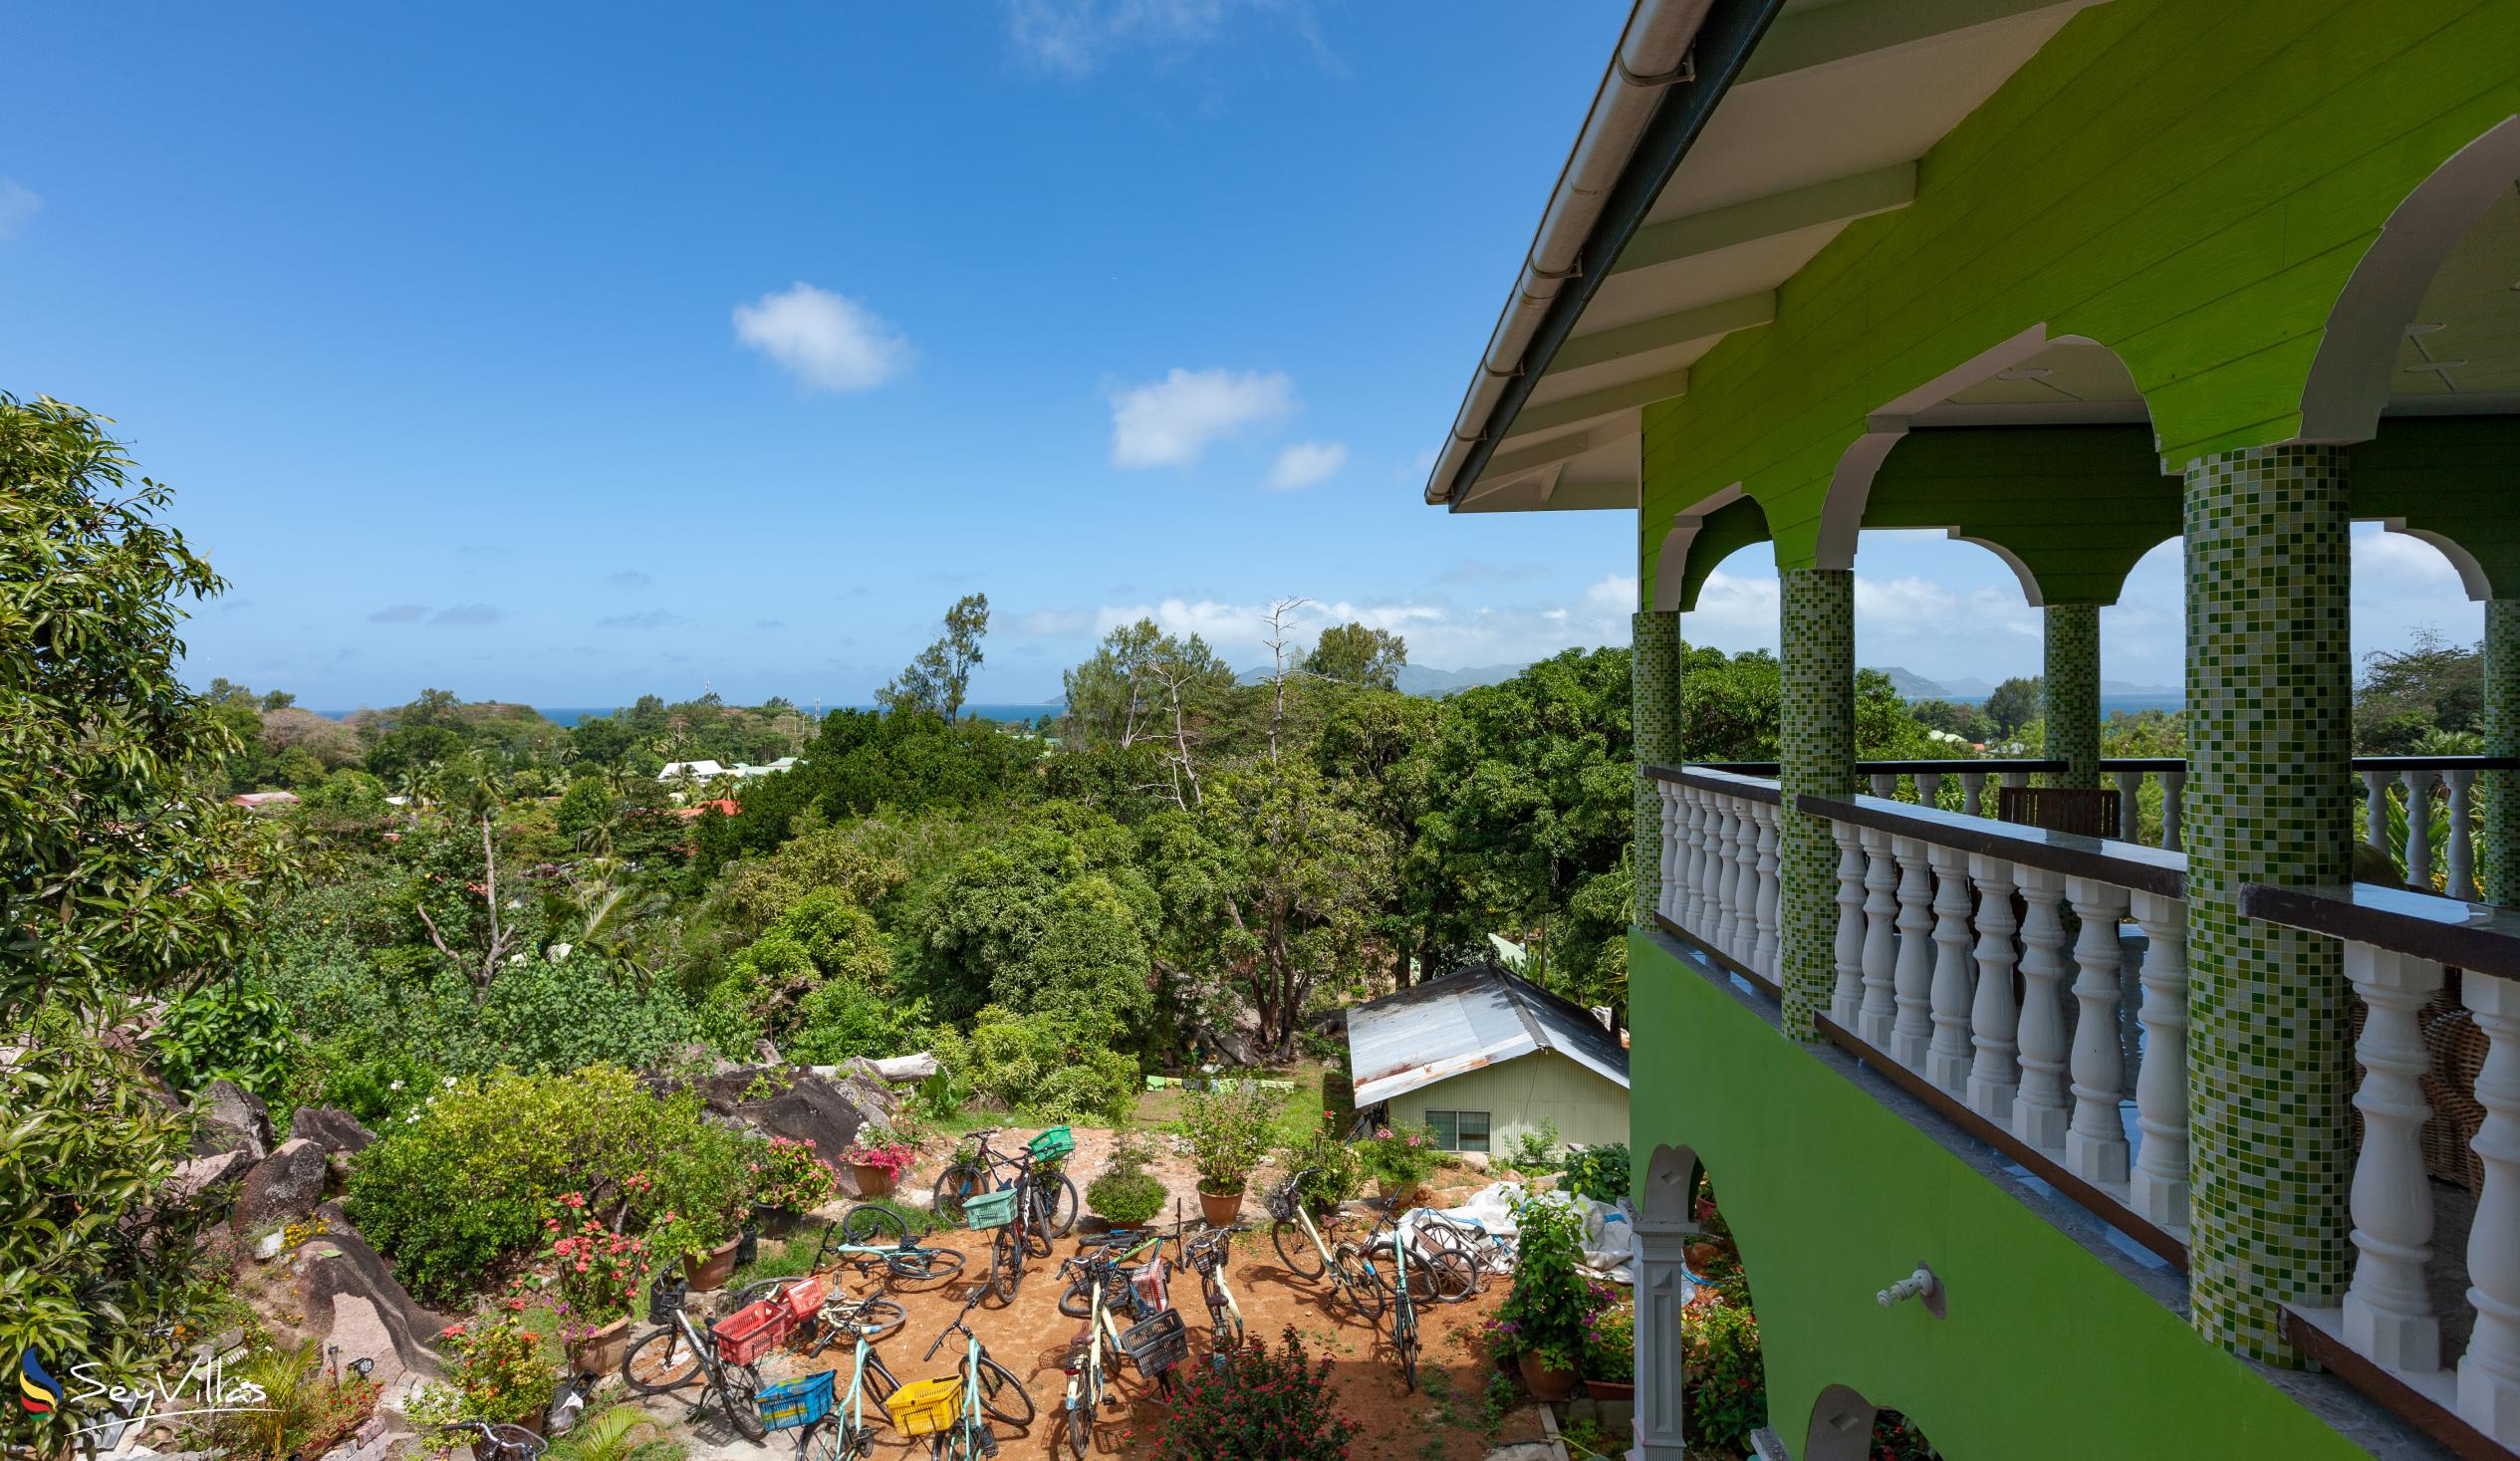 Foto 18: Villa Hortensia - Aussenbereich - La Digue (Seychellen)